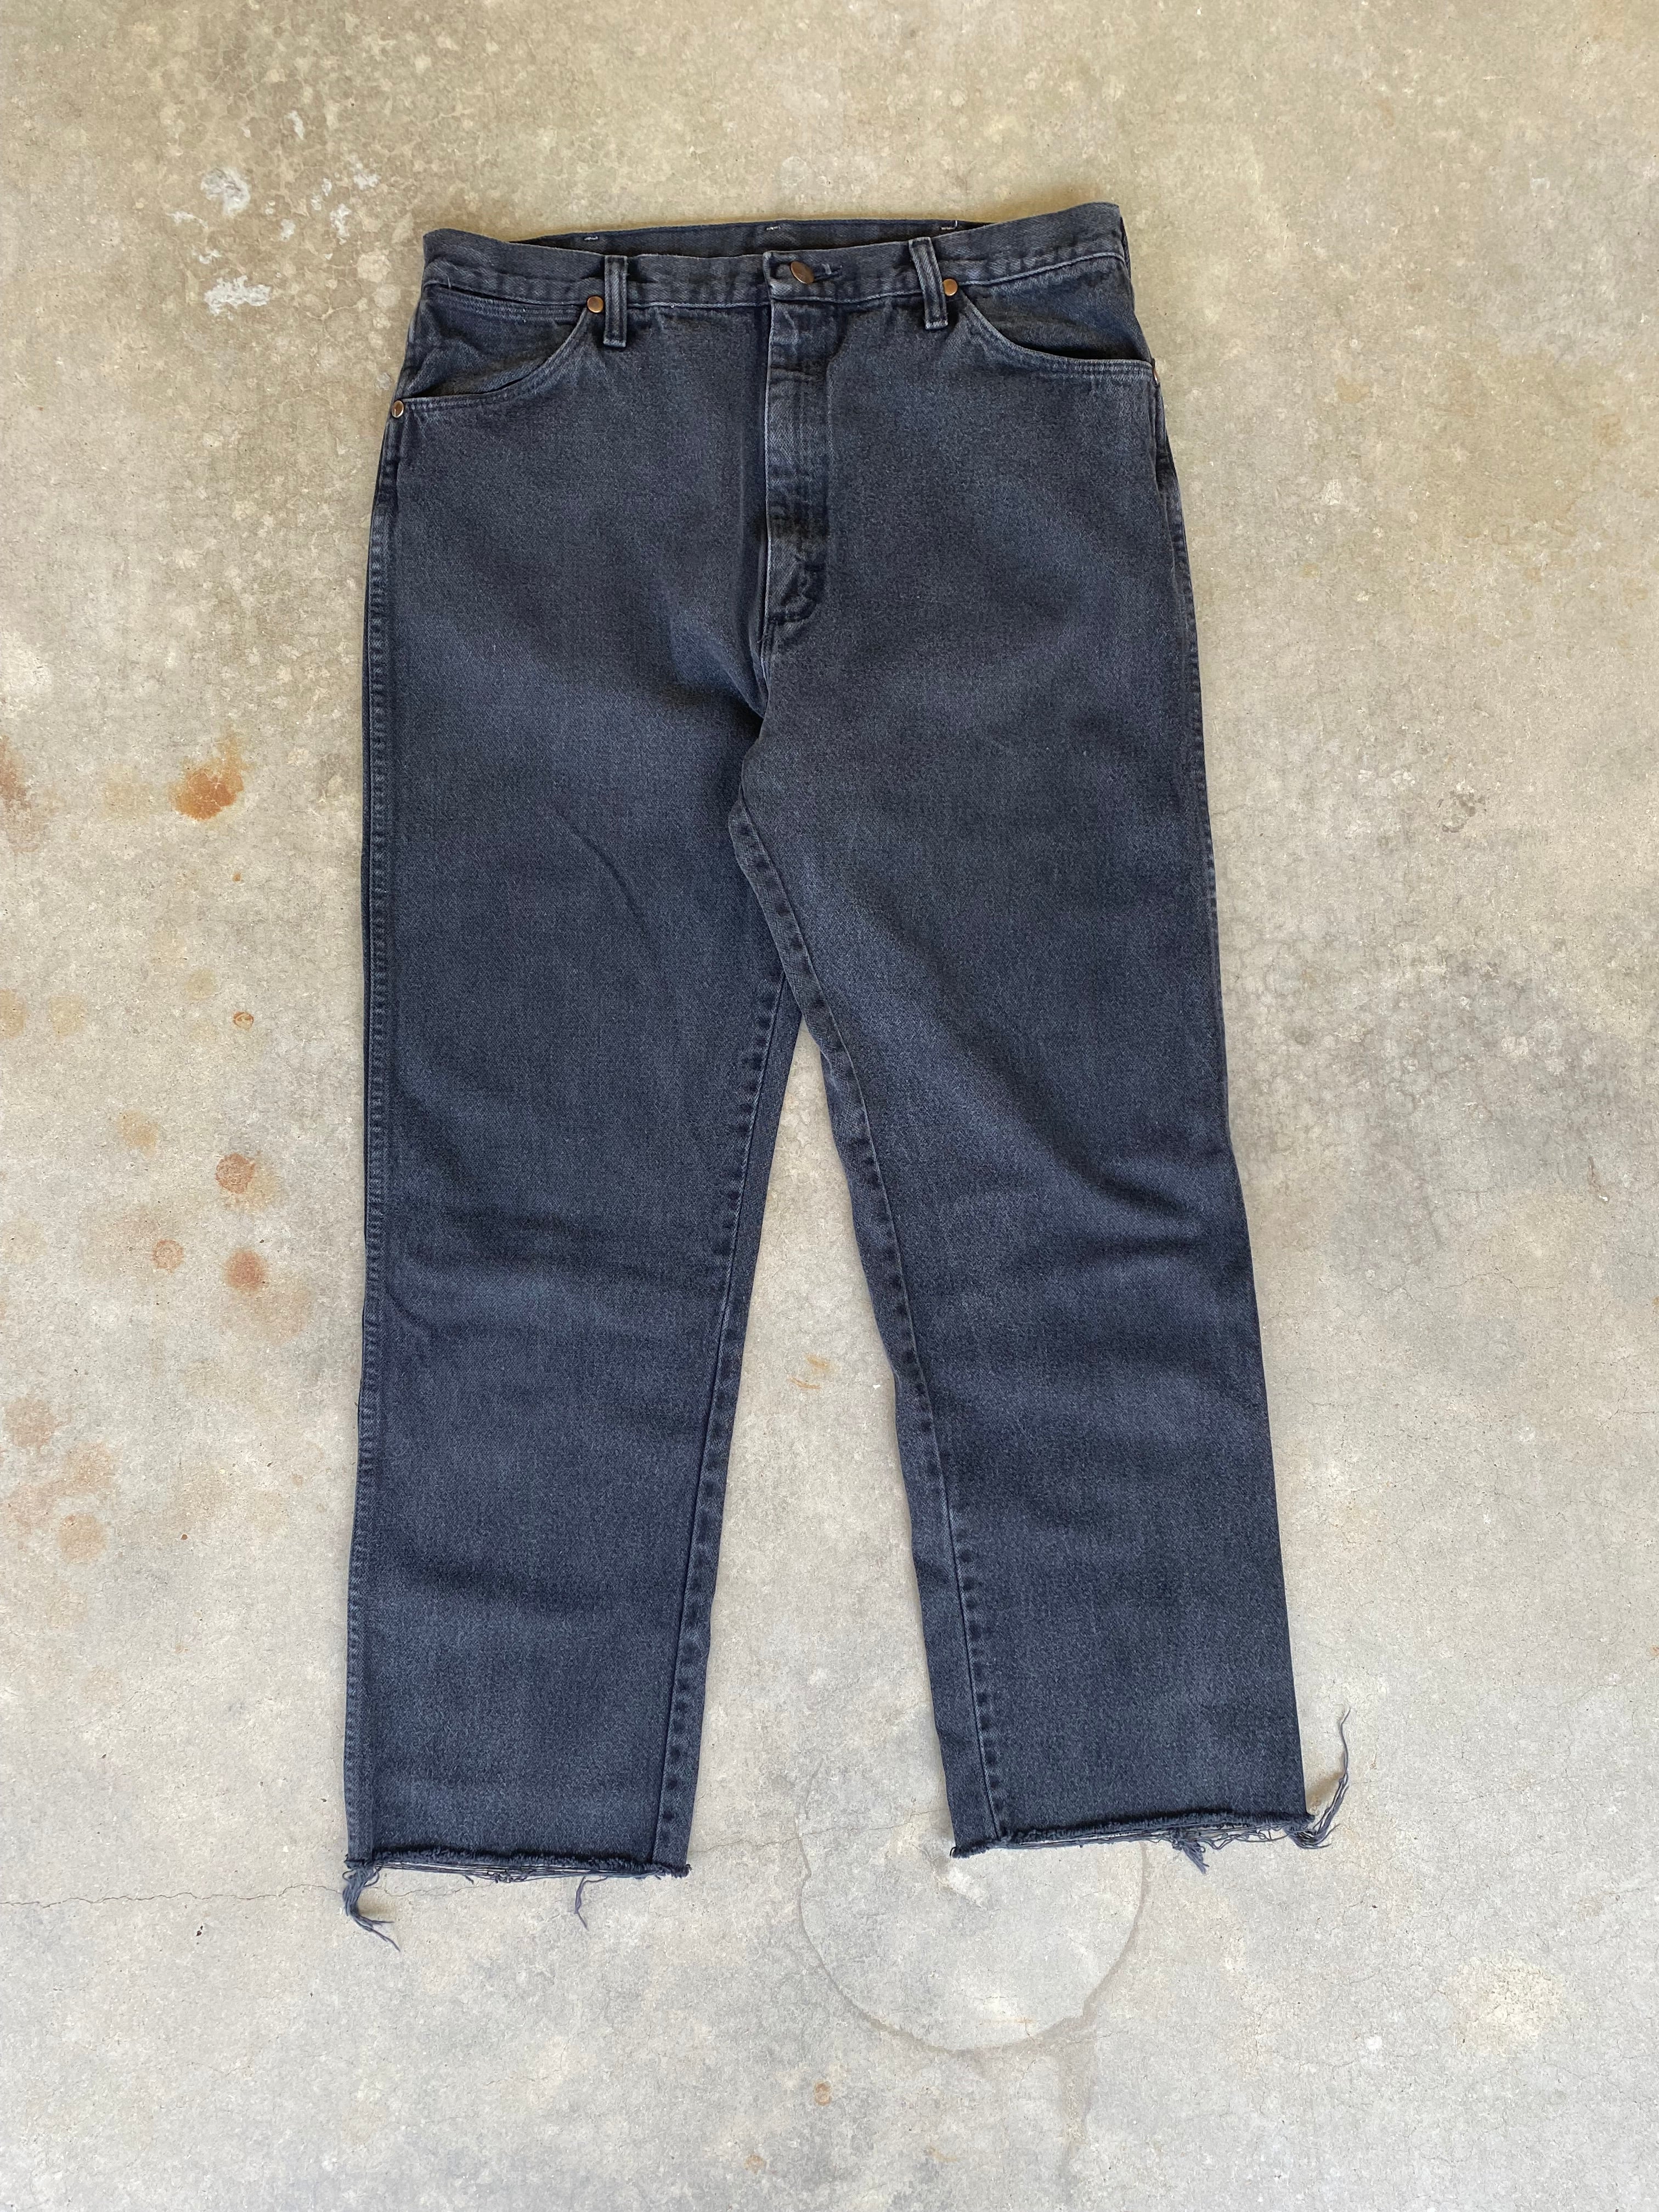 Vintage Wrangler Cropped Jeans (34"x29")